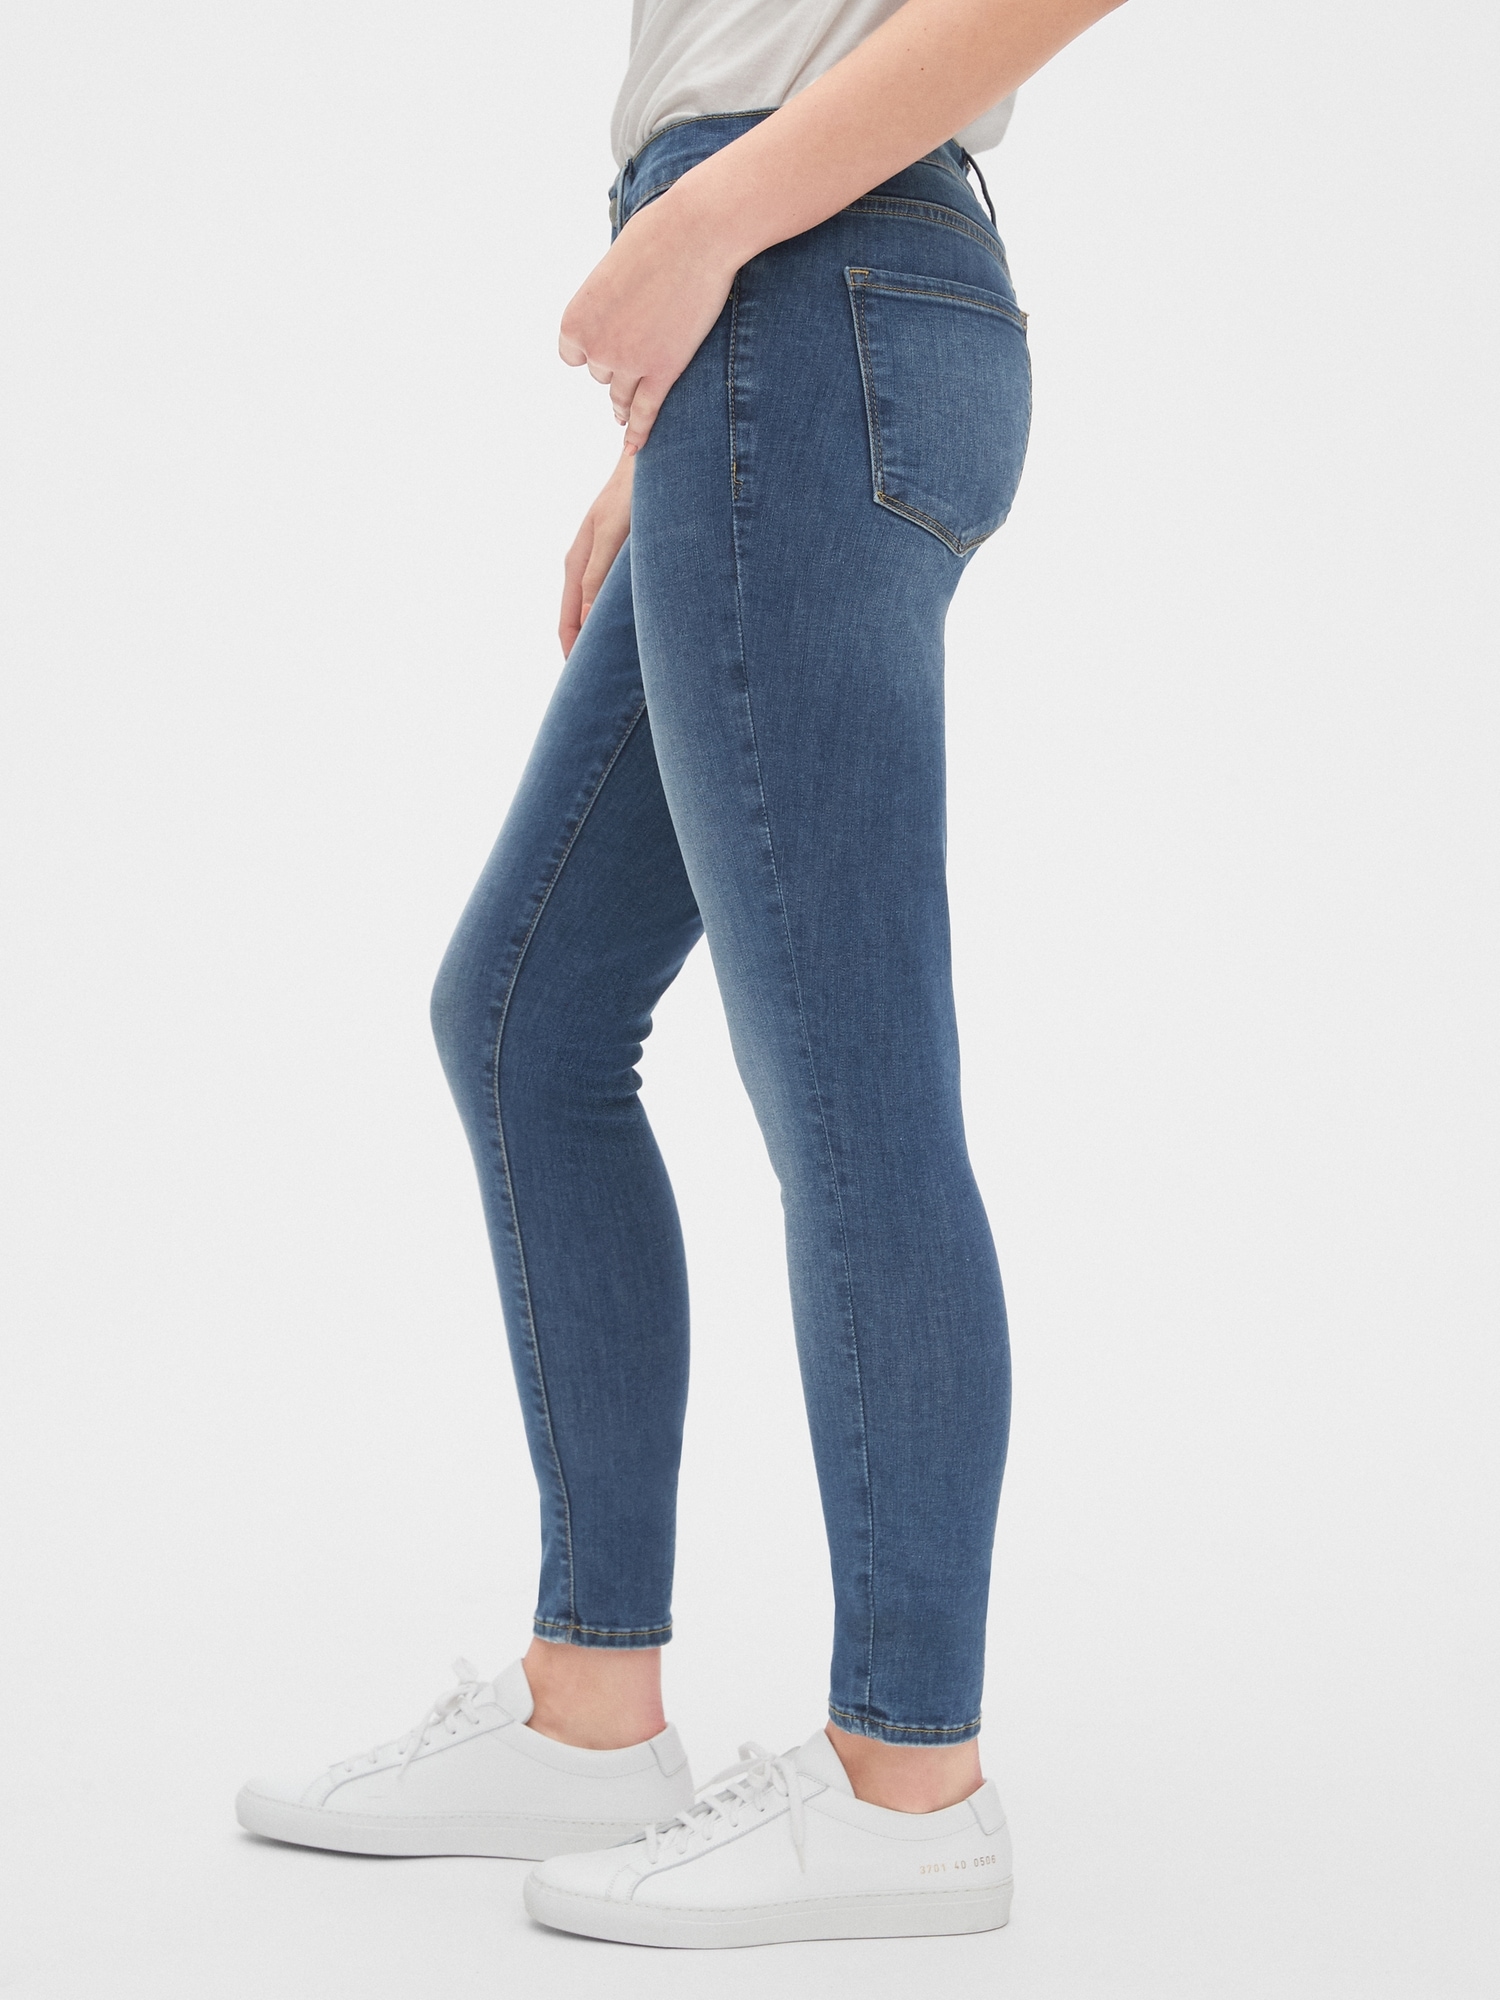 gap mid rise jeans